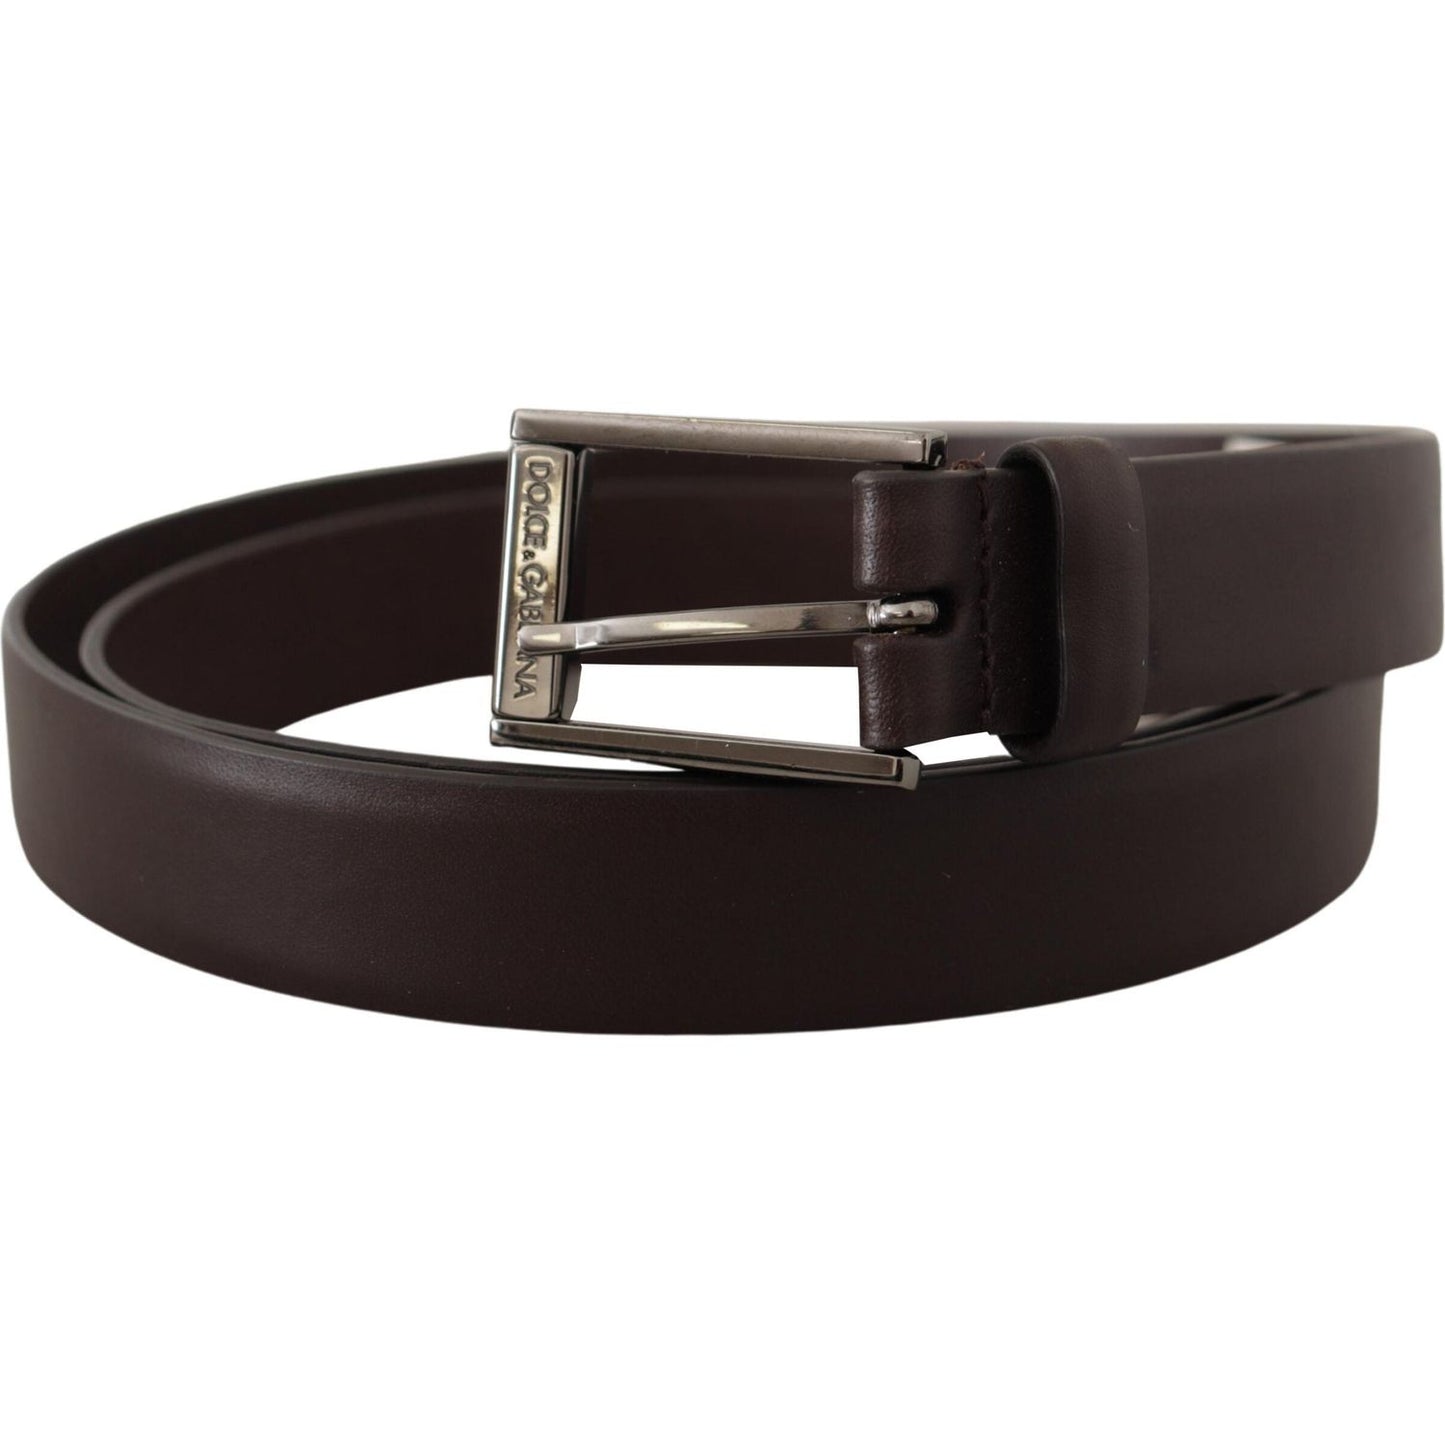 Dolce & Gabbana Elegant Dark Brown Leather Belt brown-leather-silver-tone-metal-buckle-belt IMG_7284-scaled-5b18dbe0-2ac.jpg